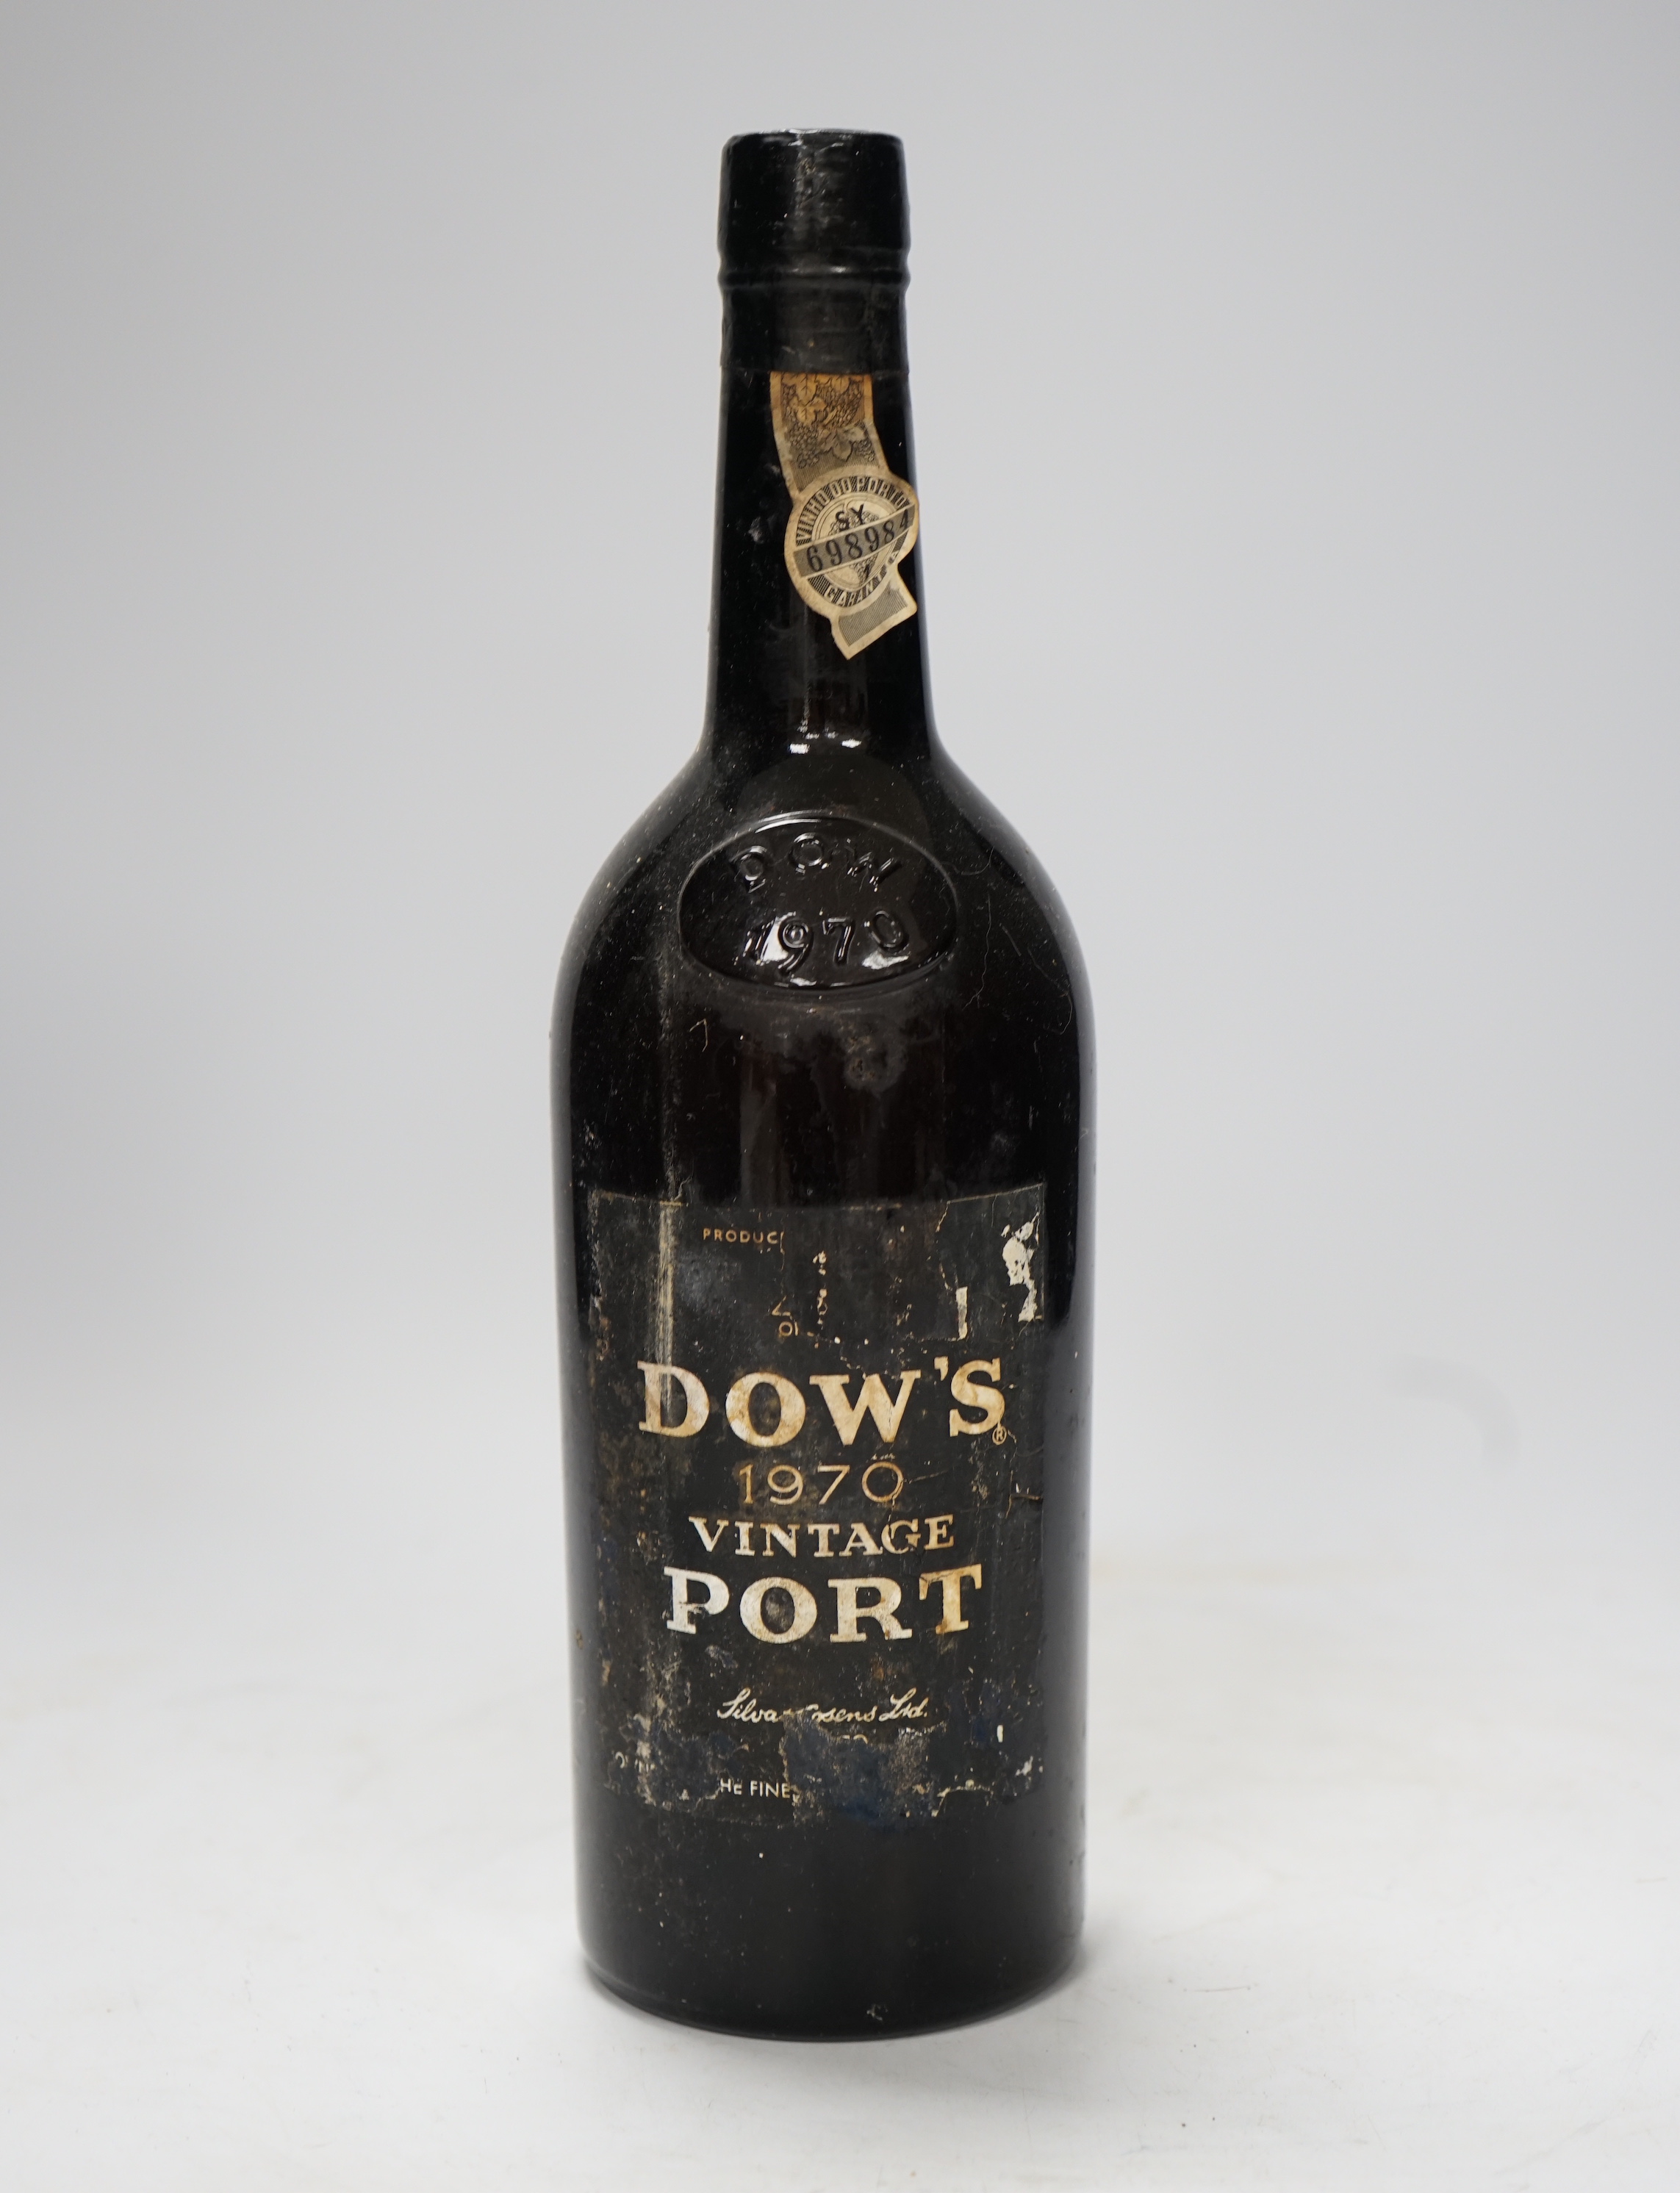 Seventeen bottles of Dows Vintage Port - nine 1970, eight 1975